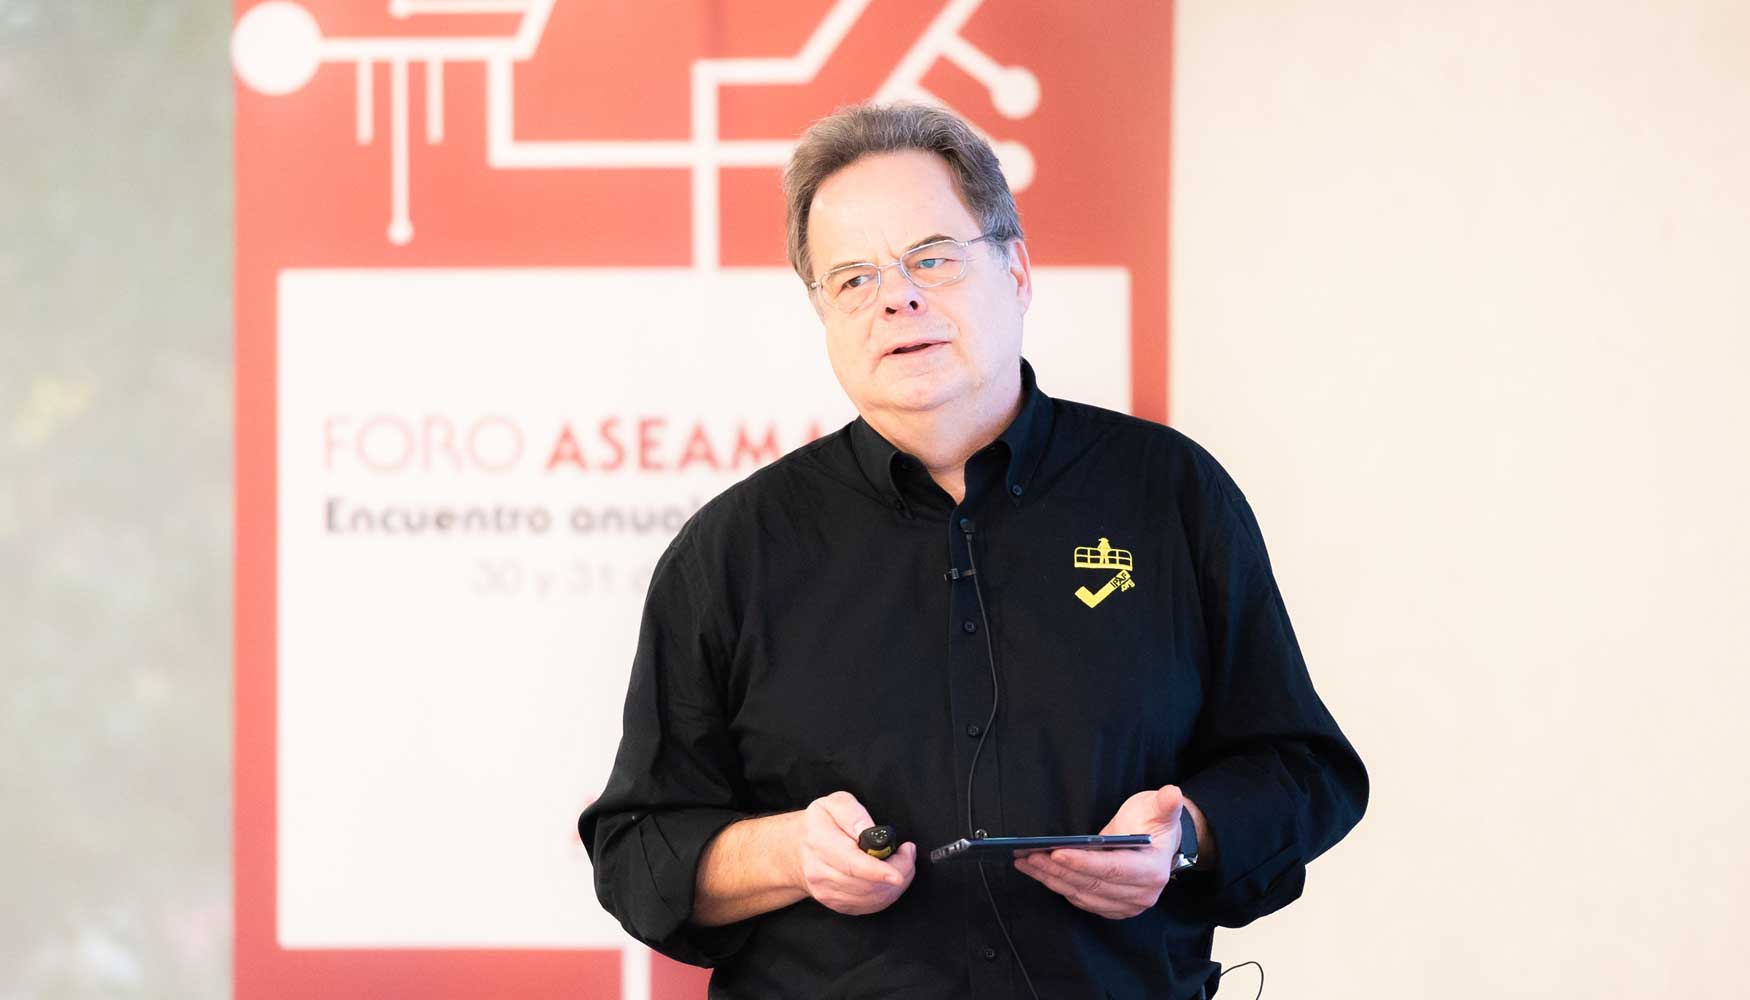 Tim Whiteman, CEO de Ipaf